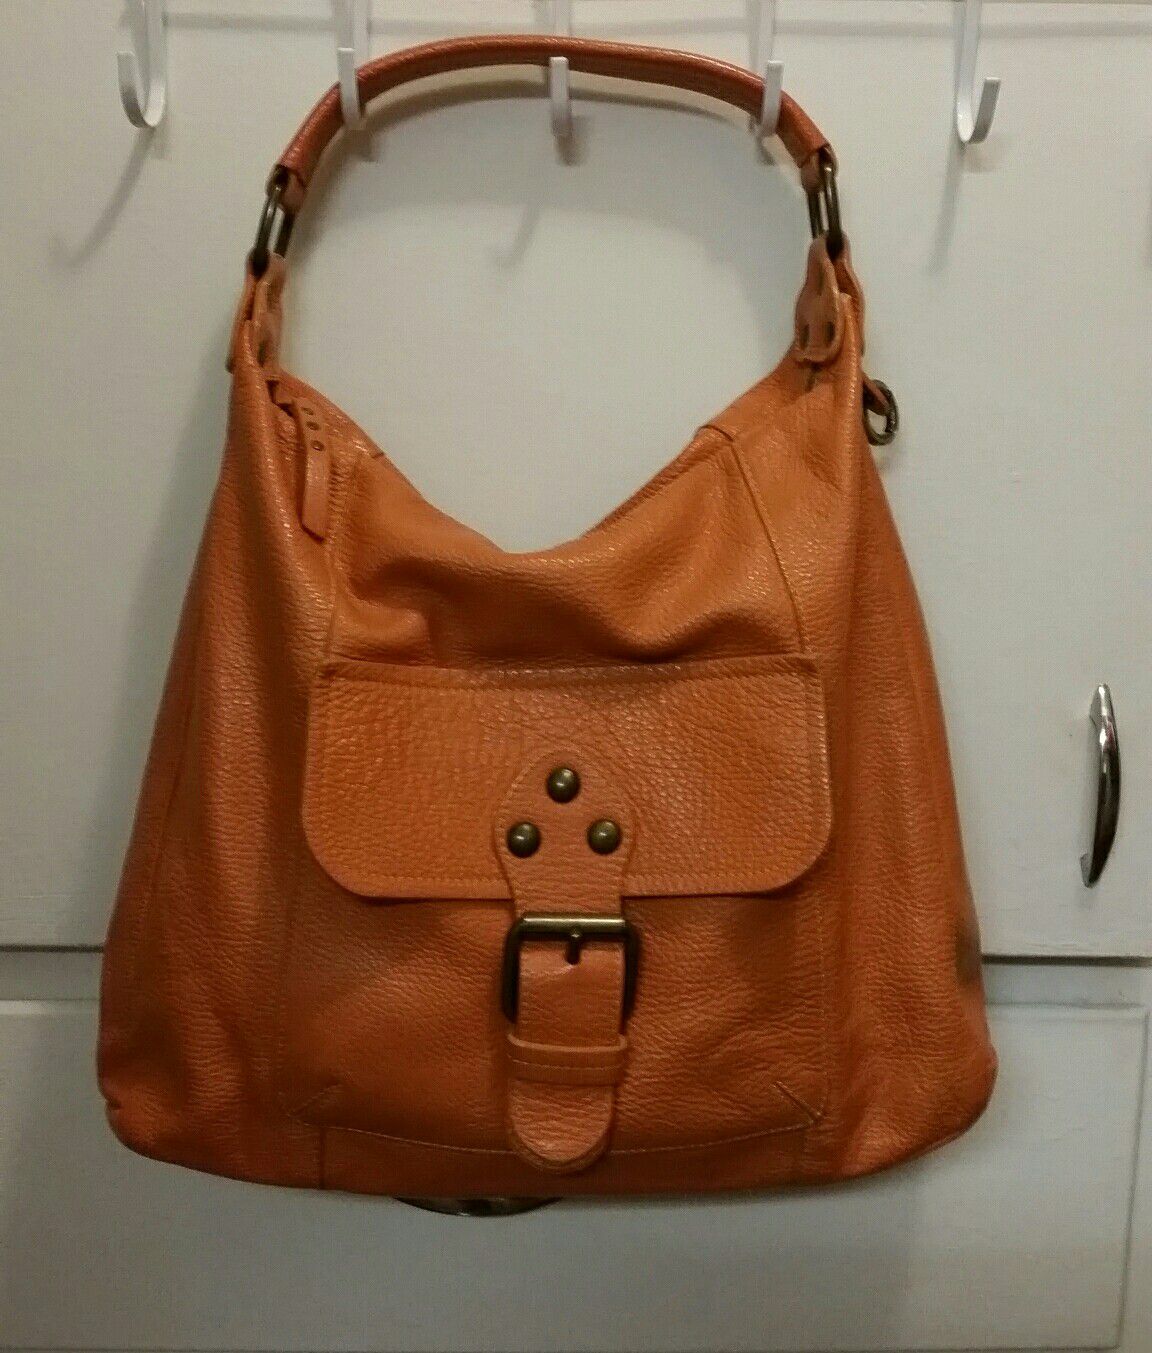 Sofia C - Gorgeous Italian Tan Leather Large Bag- Marked Down to $50.00